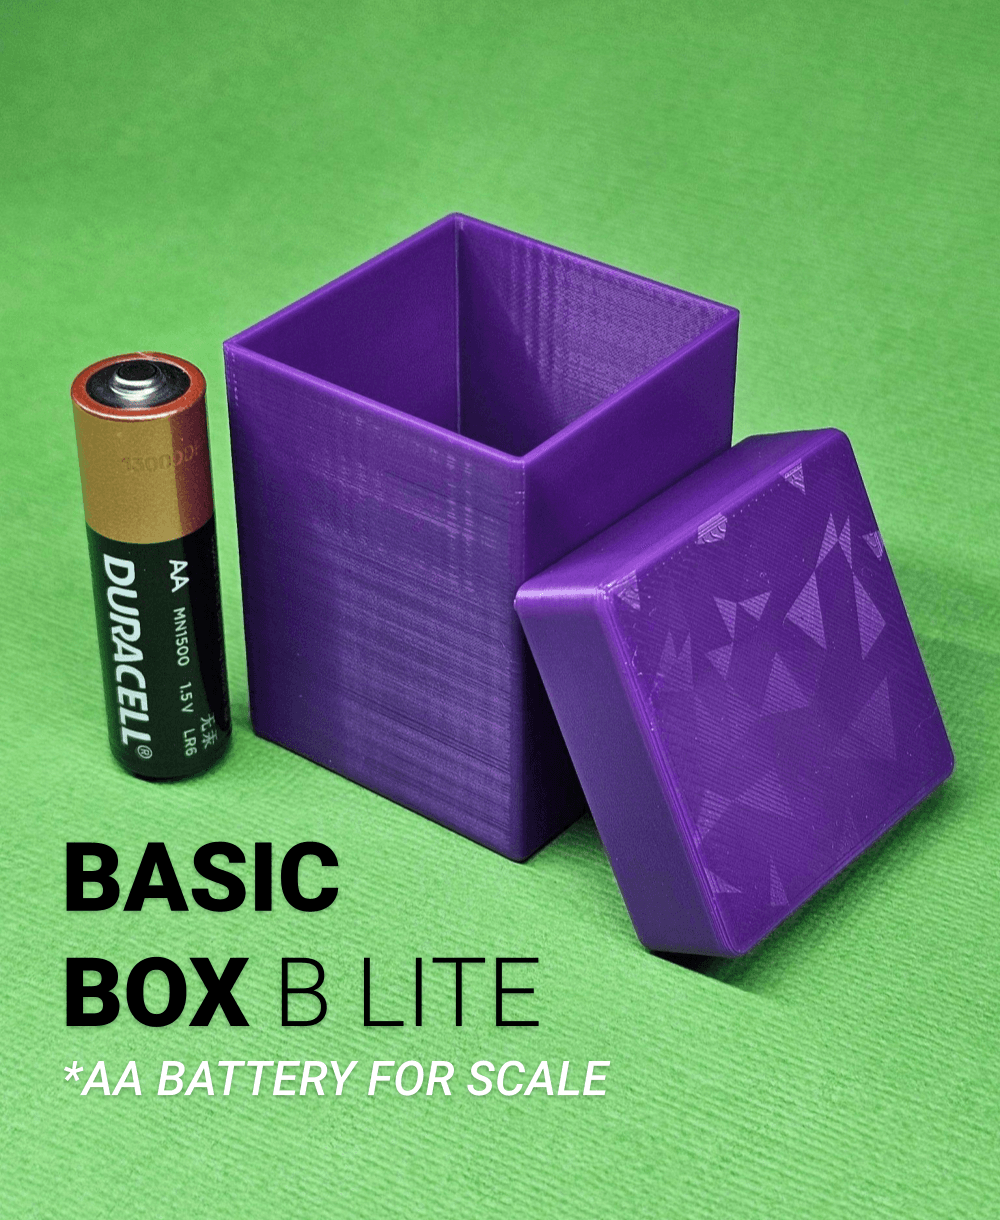 Basic Box B Lite | Gift box | Storage box | Organization | For Christmas gifts & birthday gifts 3d model